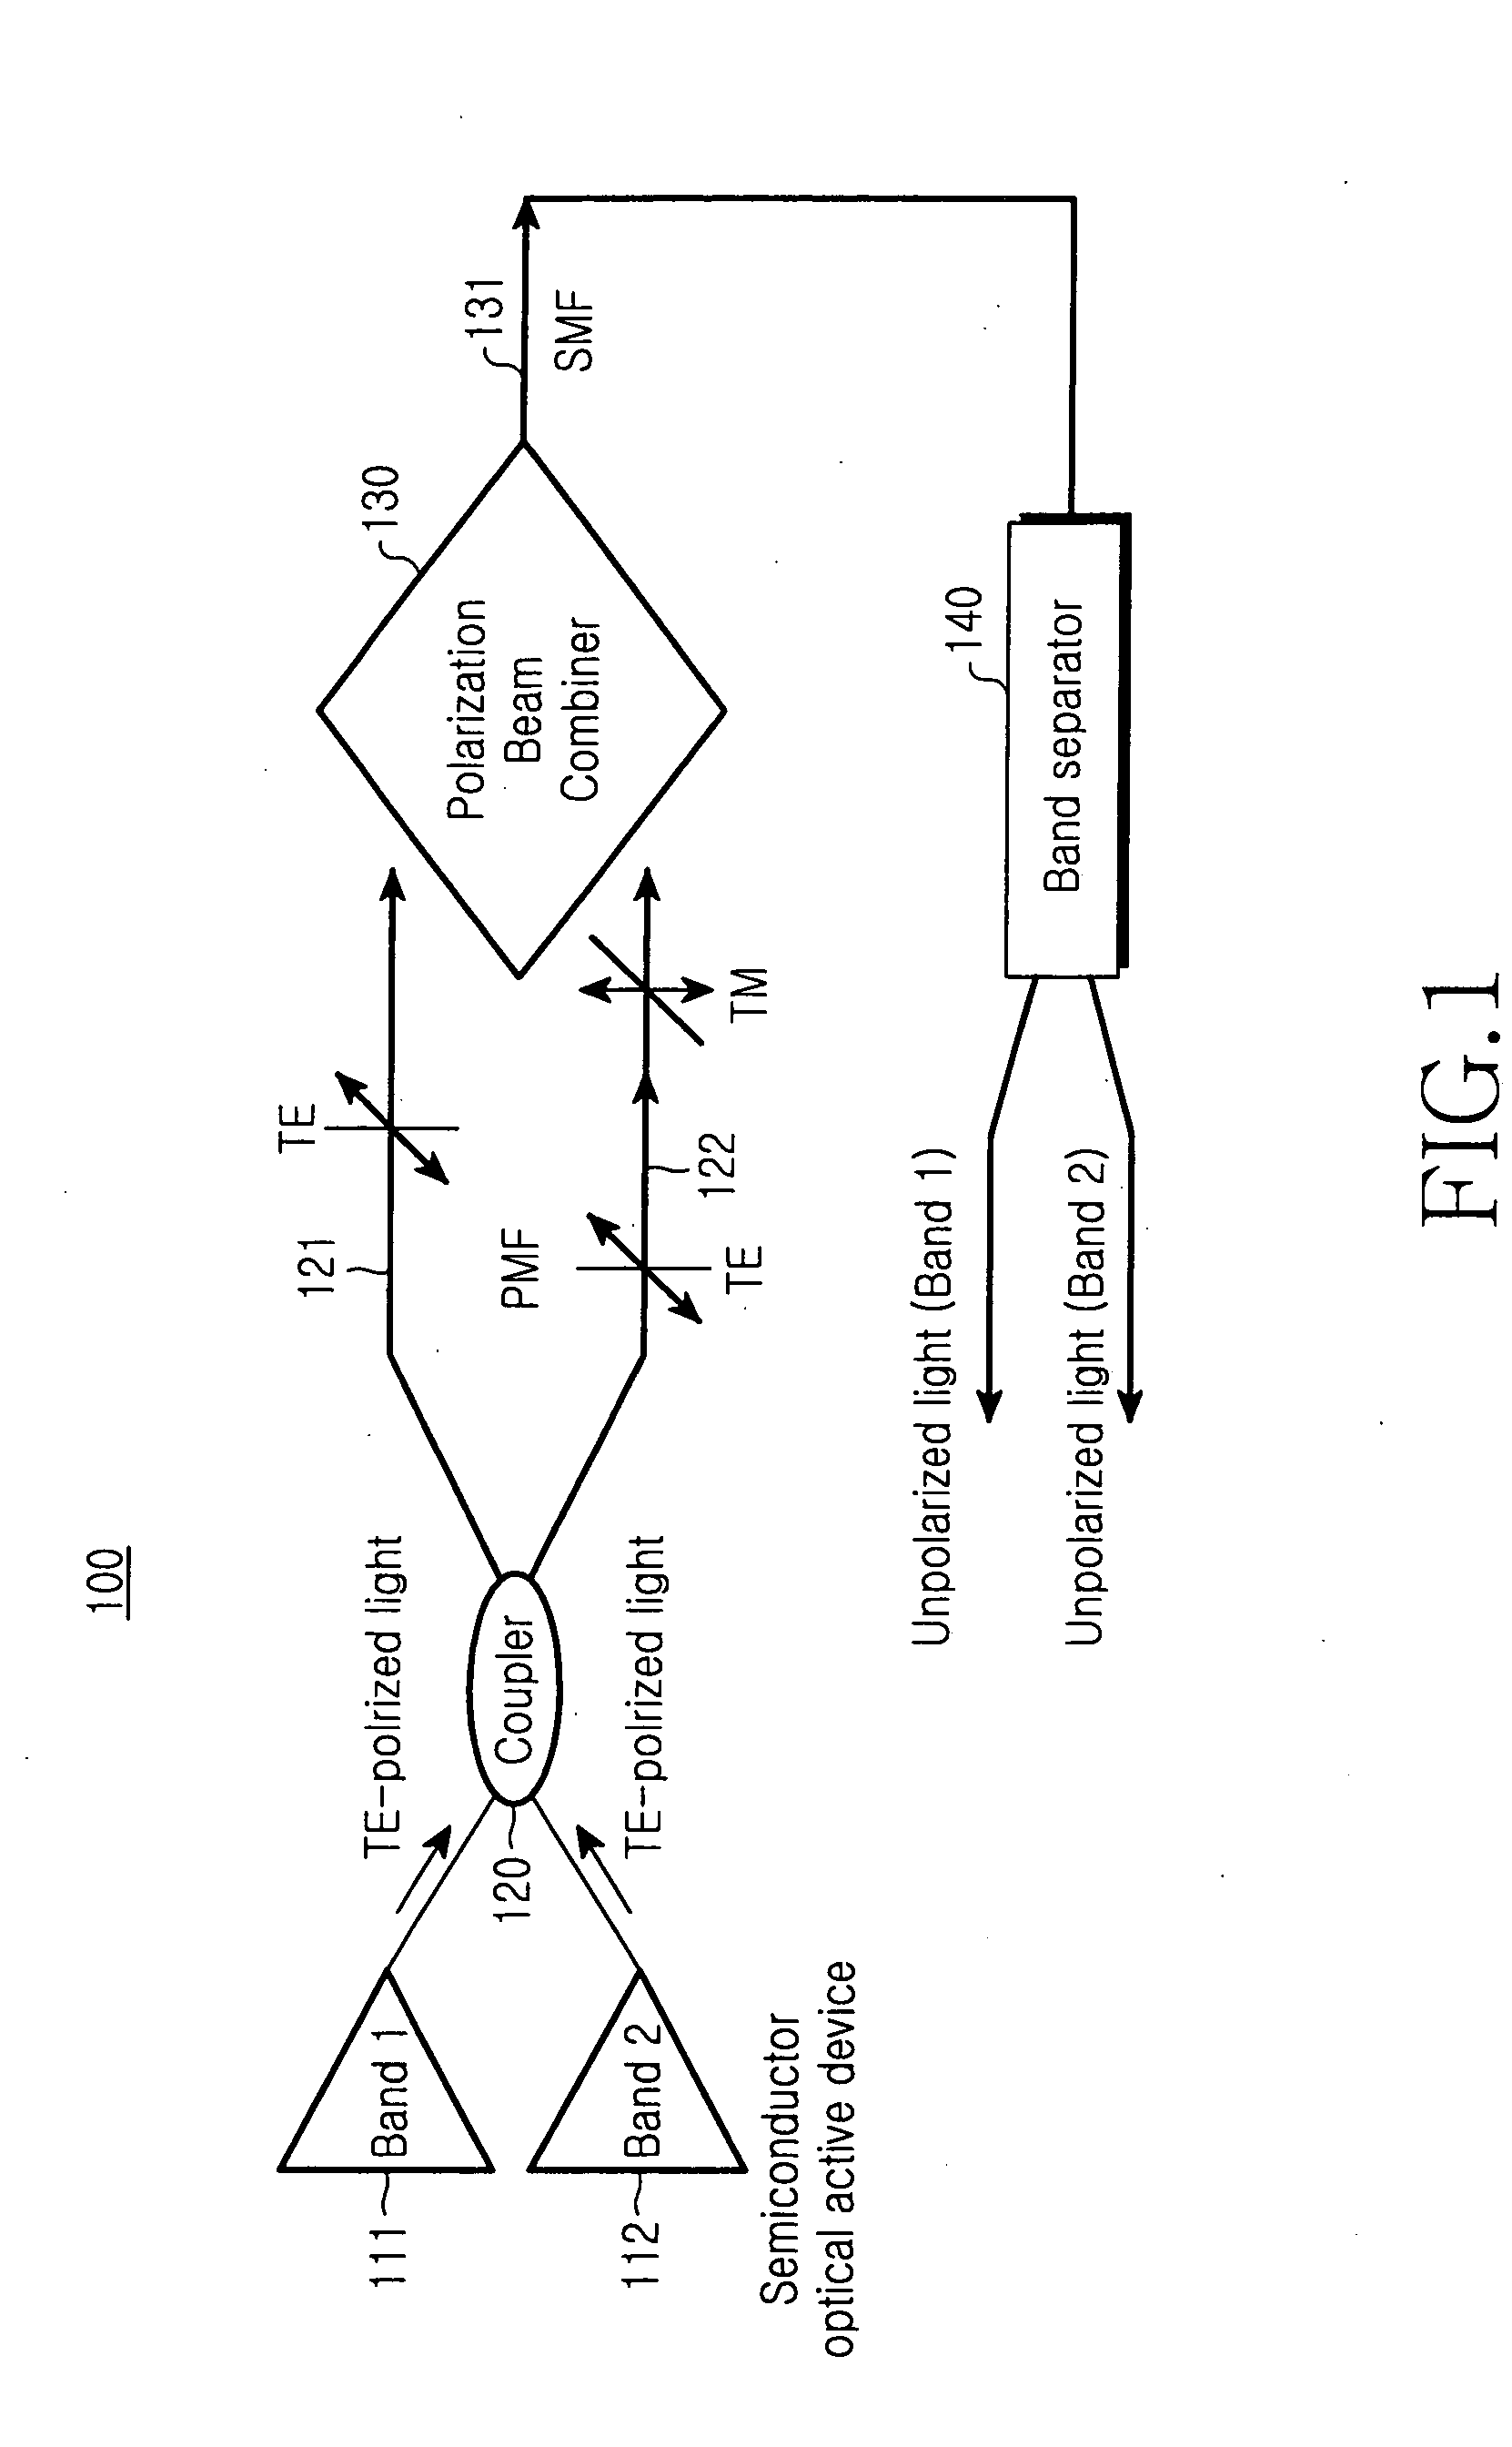 Wavelength-division-multiplexed passive optical network